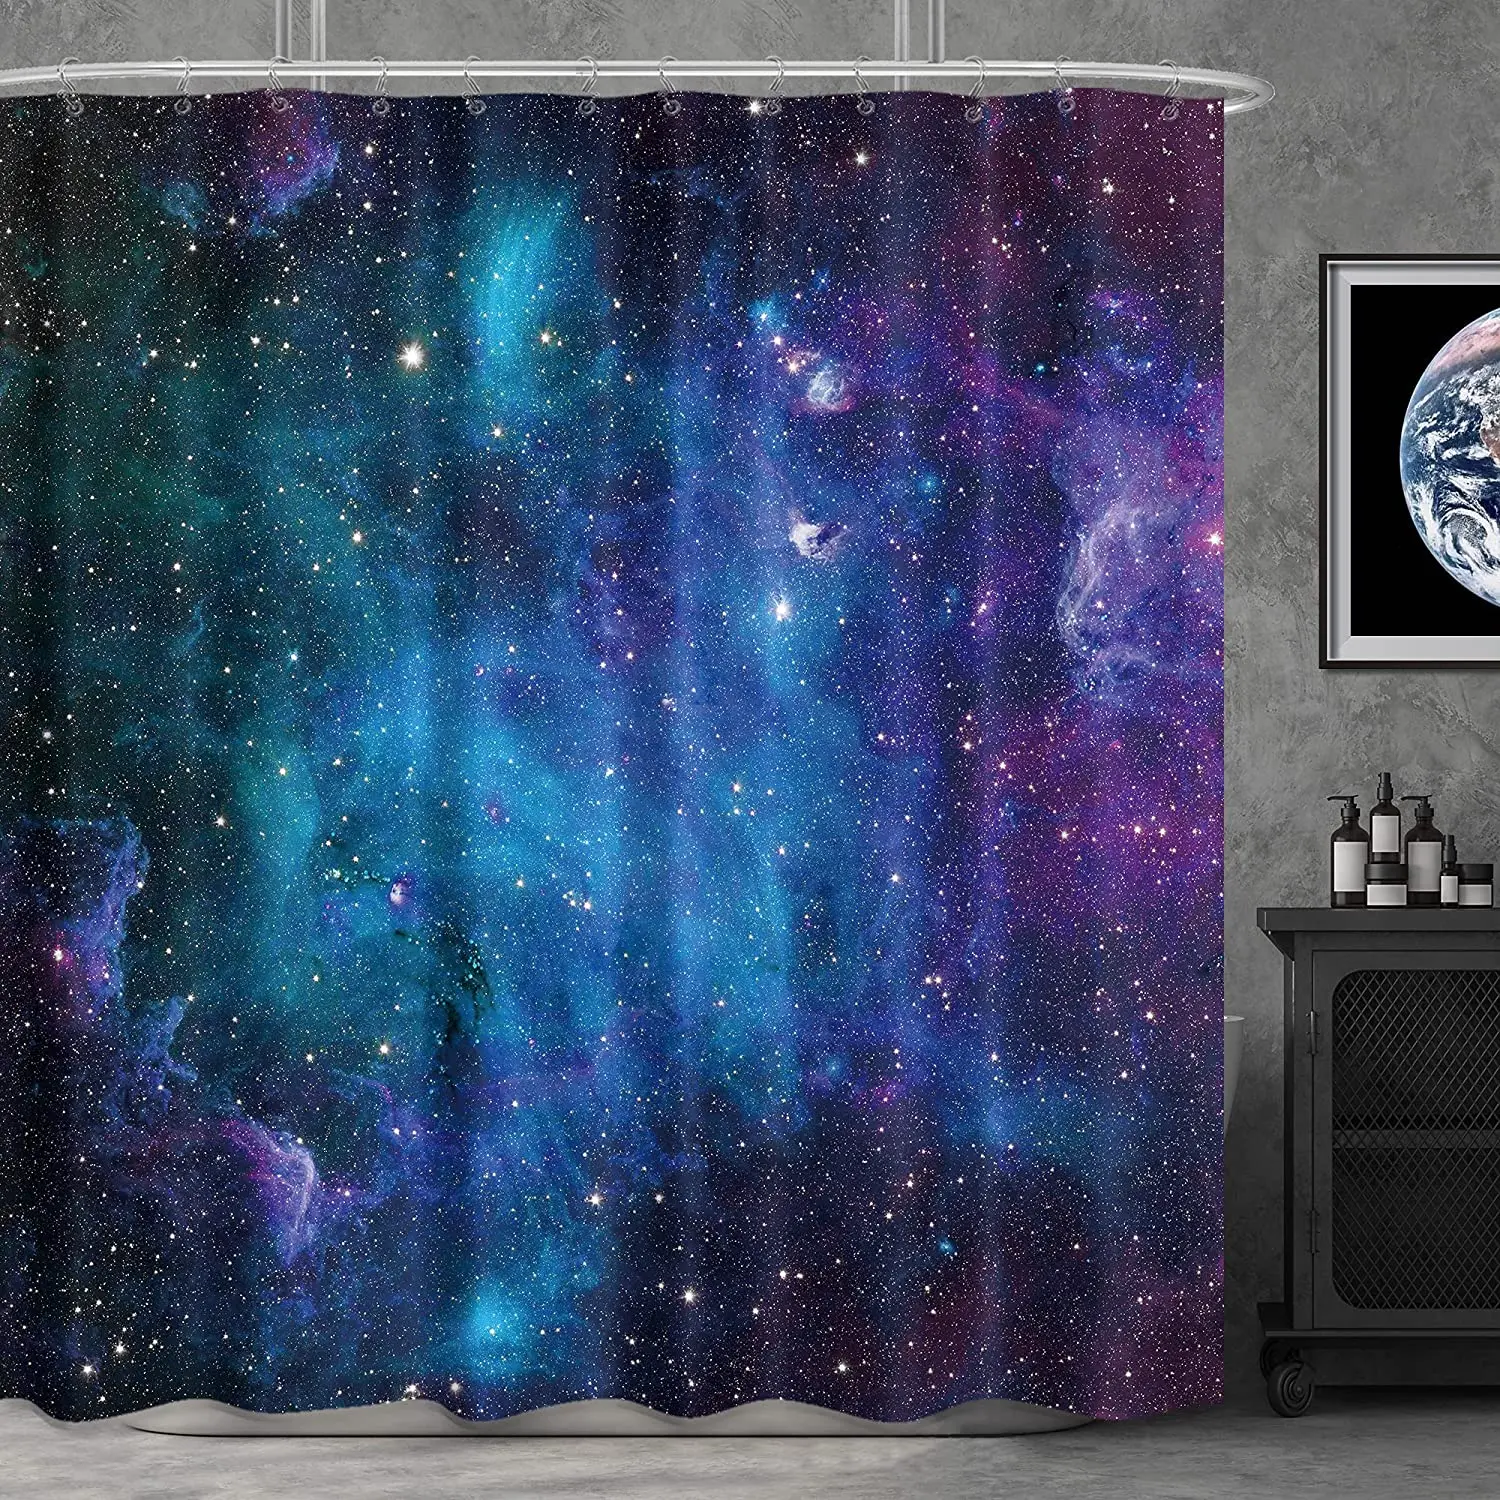 

Star Outer Space Shower Curtain for Bathroom Starry Galaxy Bathtub Set Men Boys Trippy Nebula Universe Planet Bathroom Decor